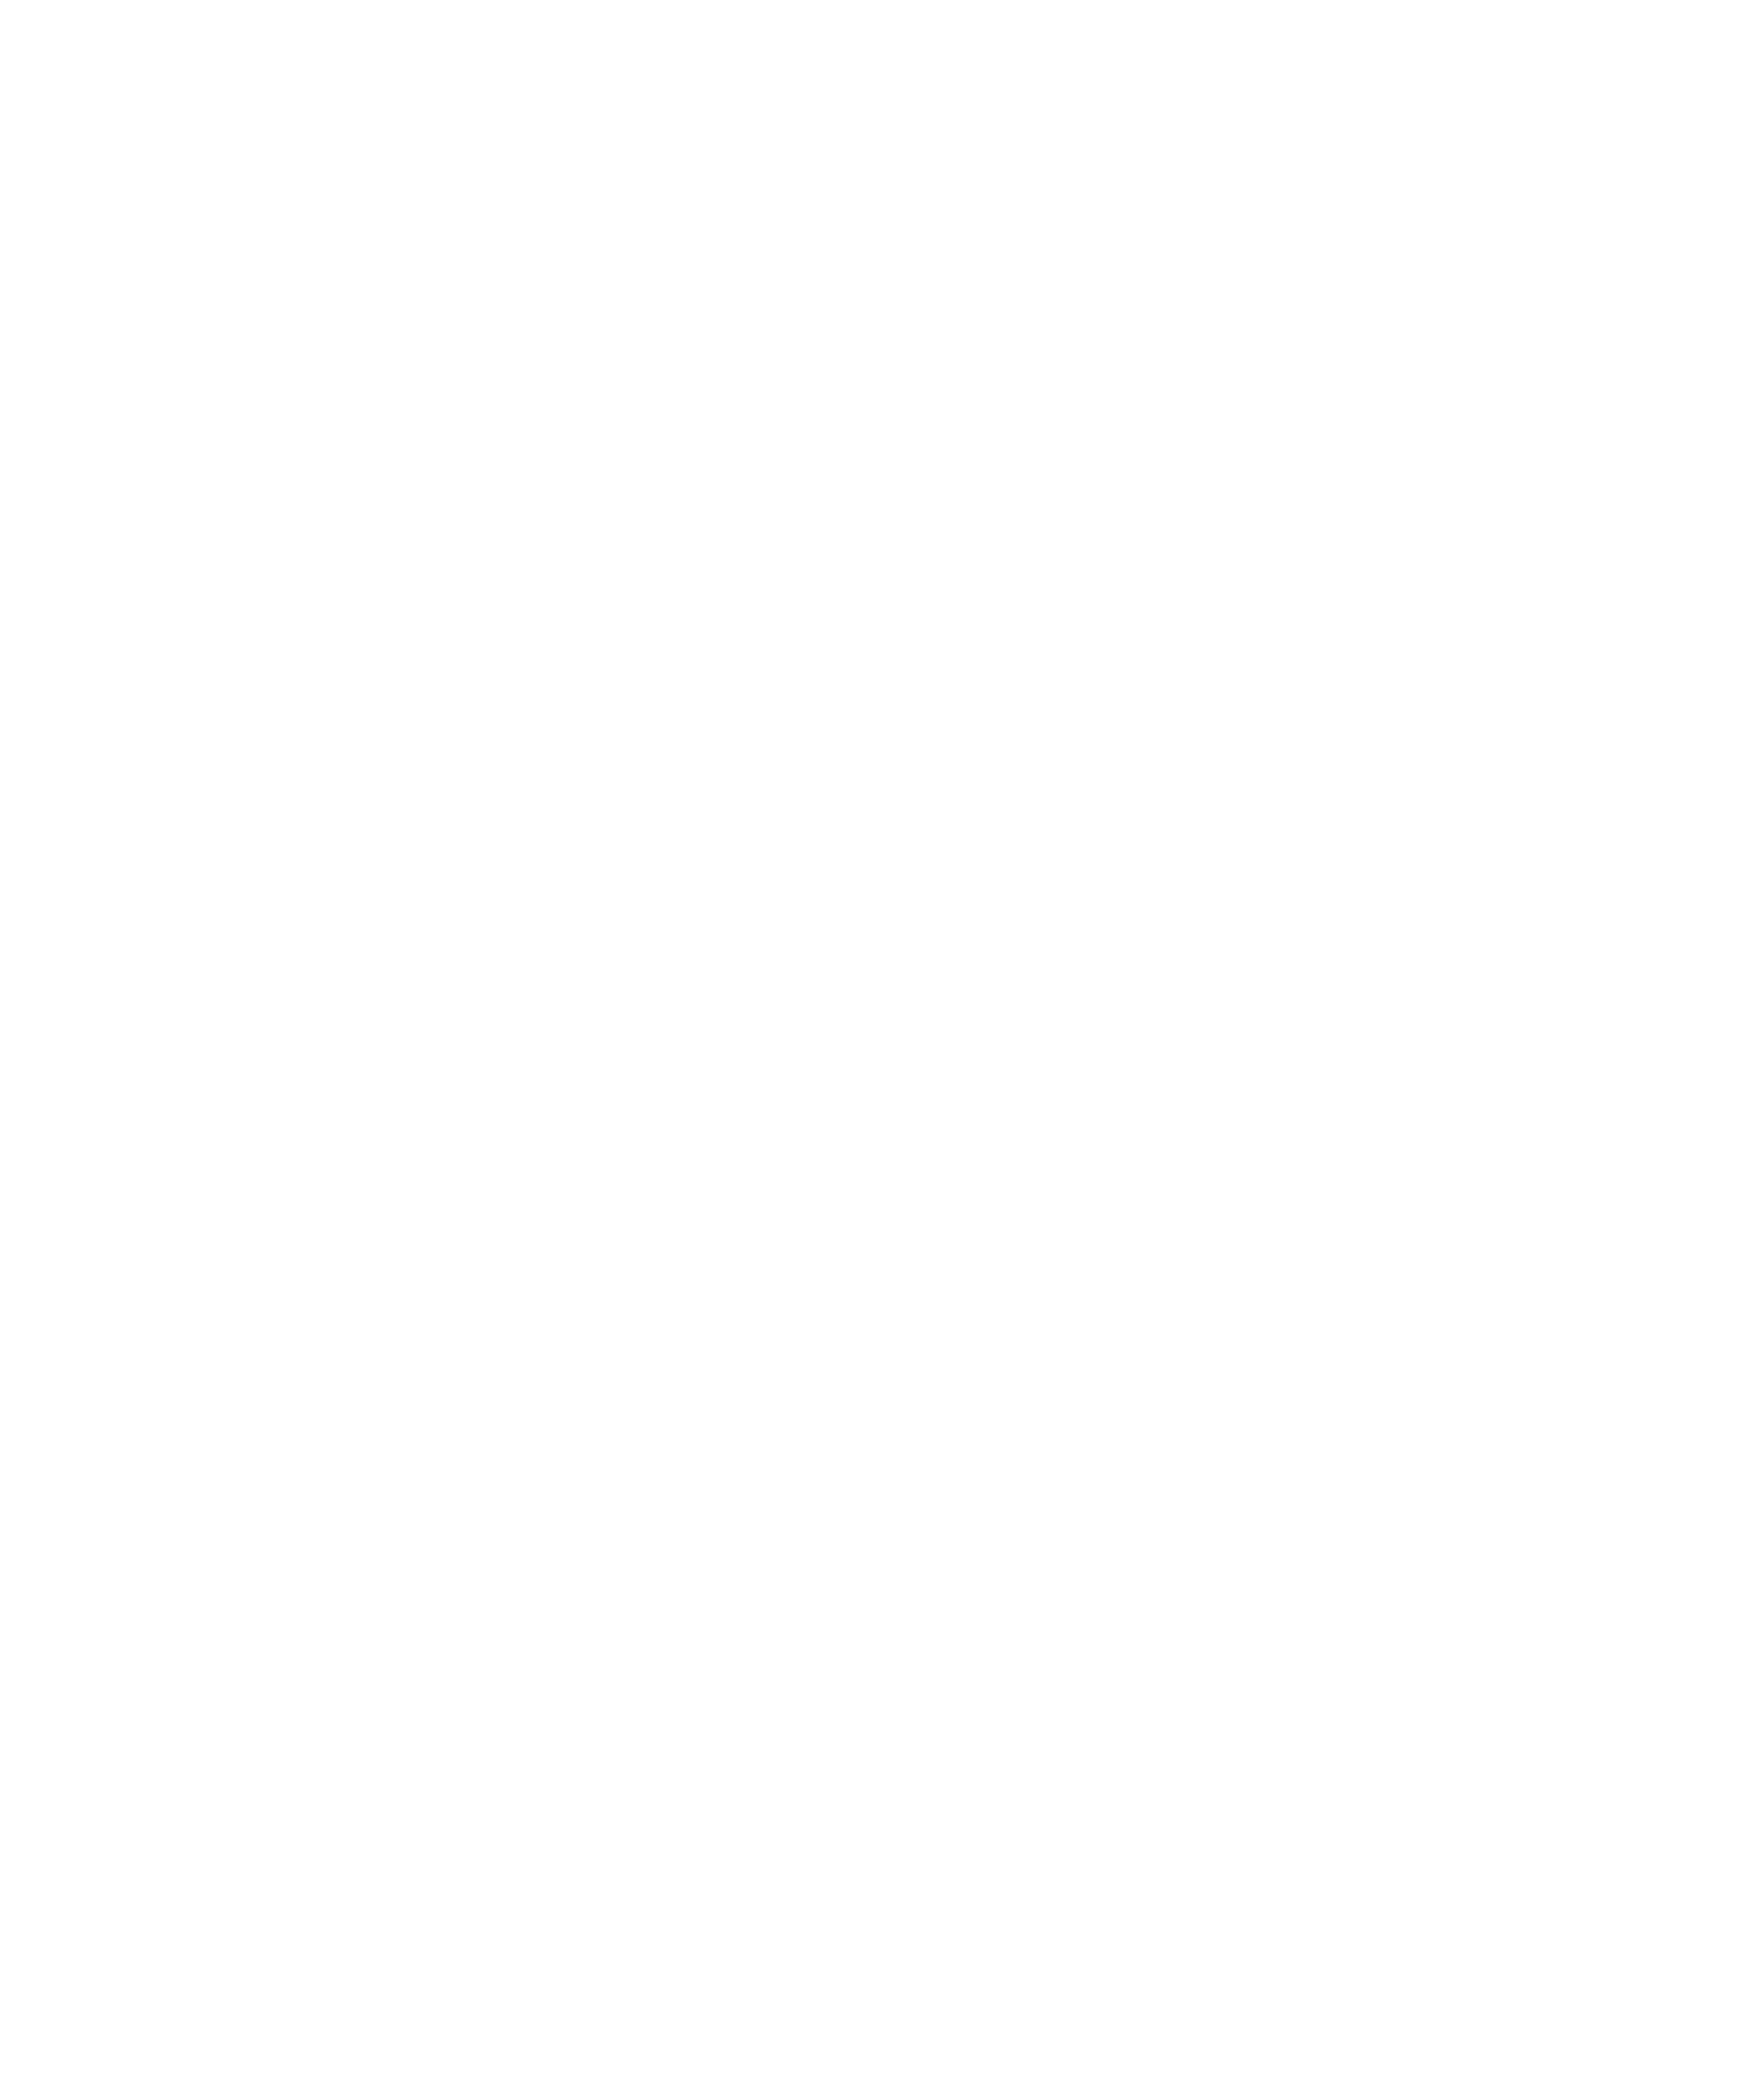 BC LIONS GENK